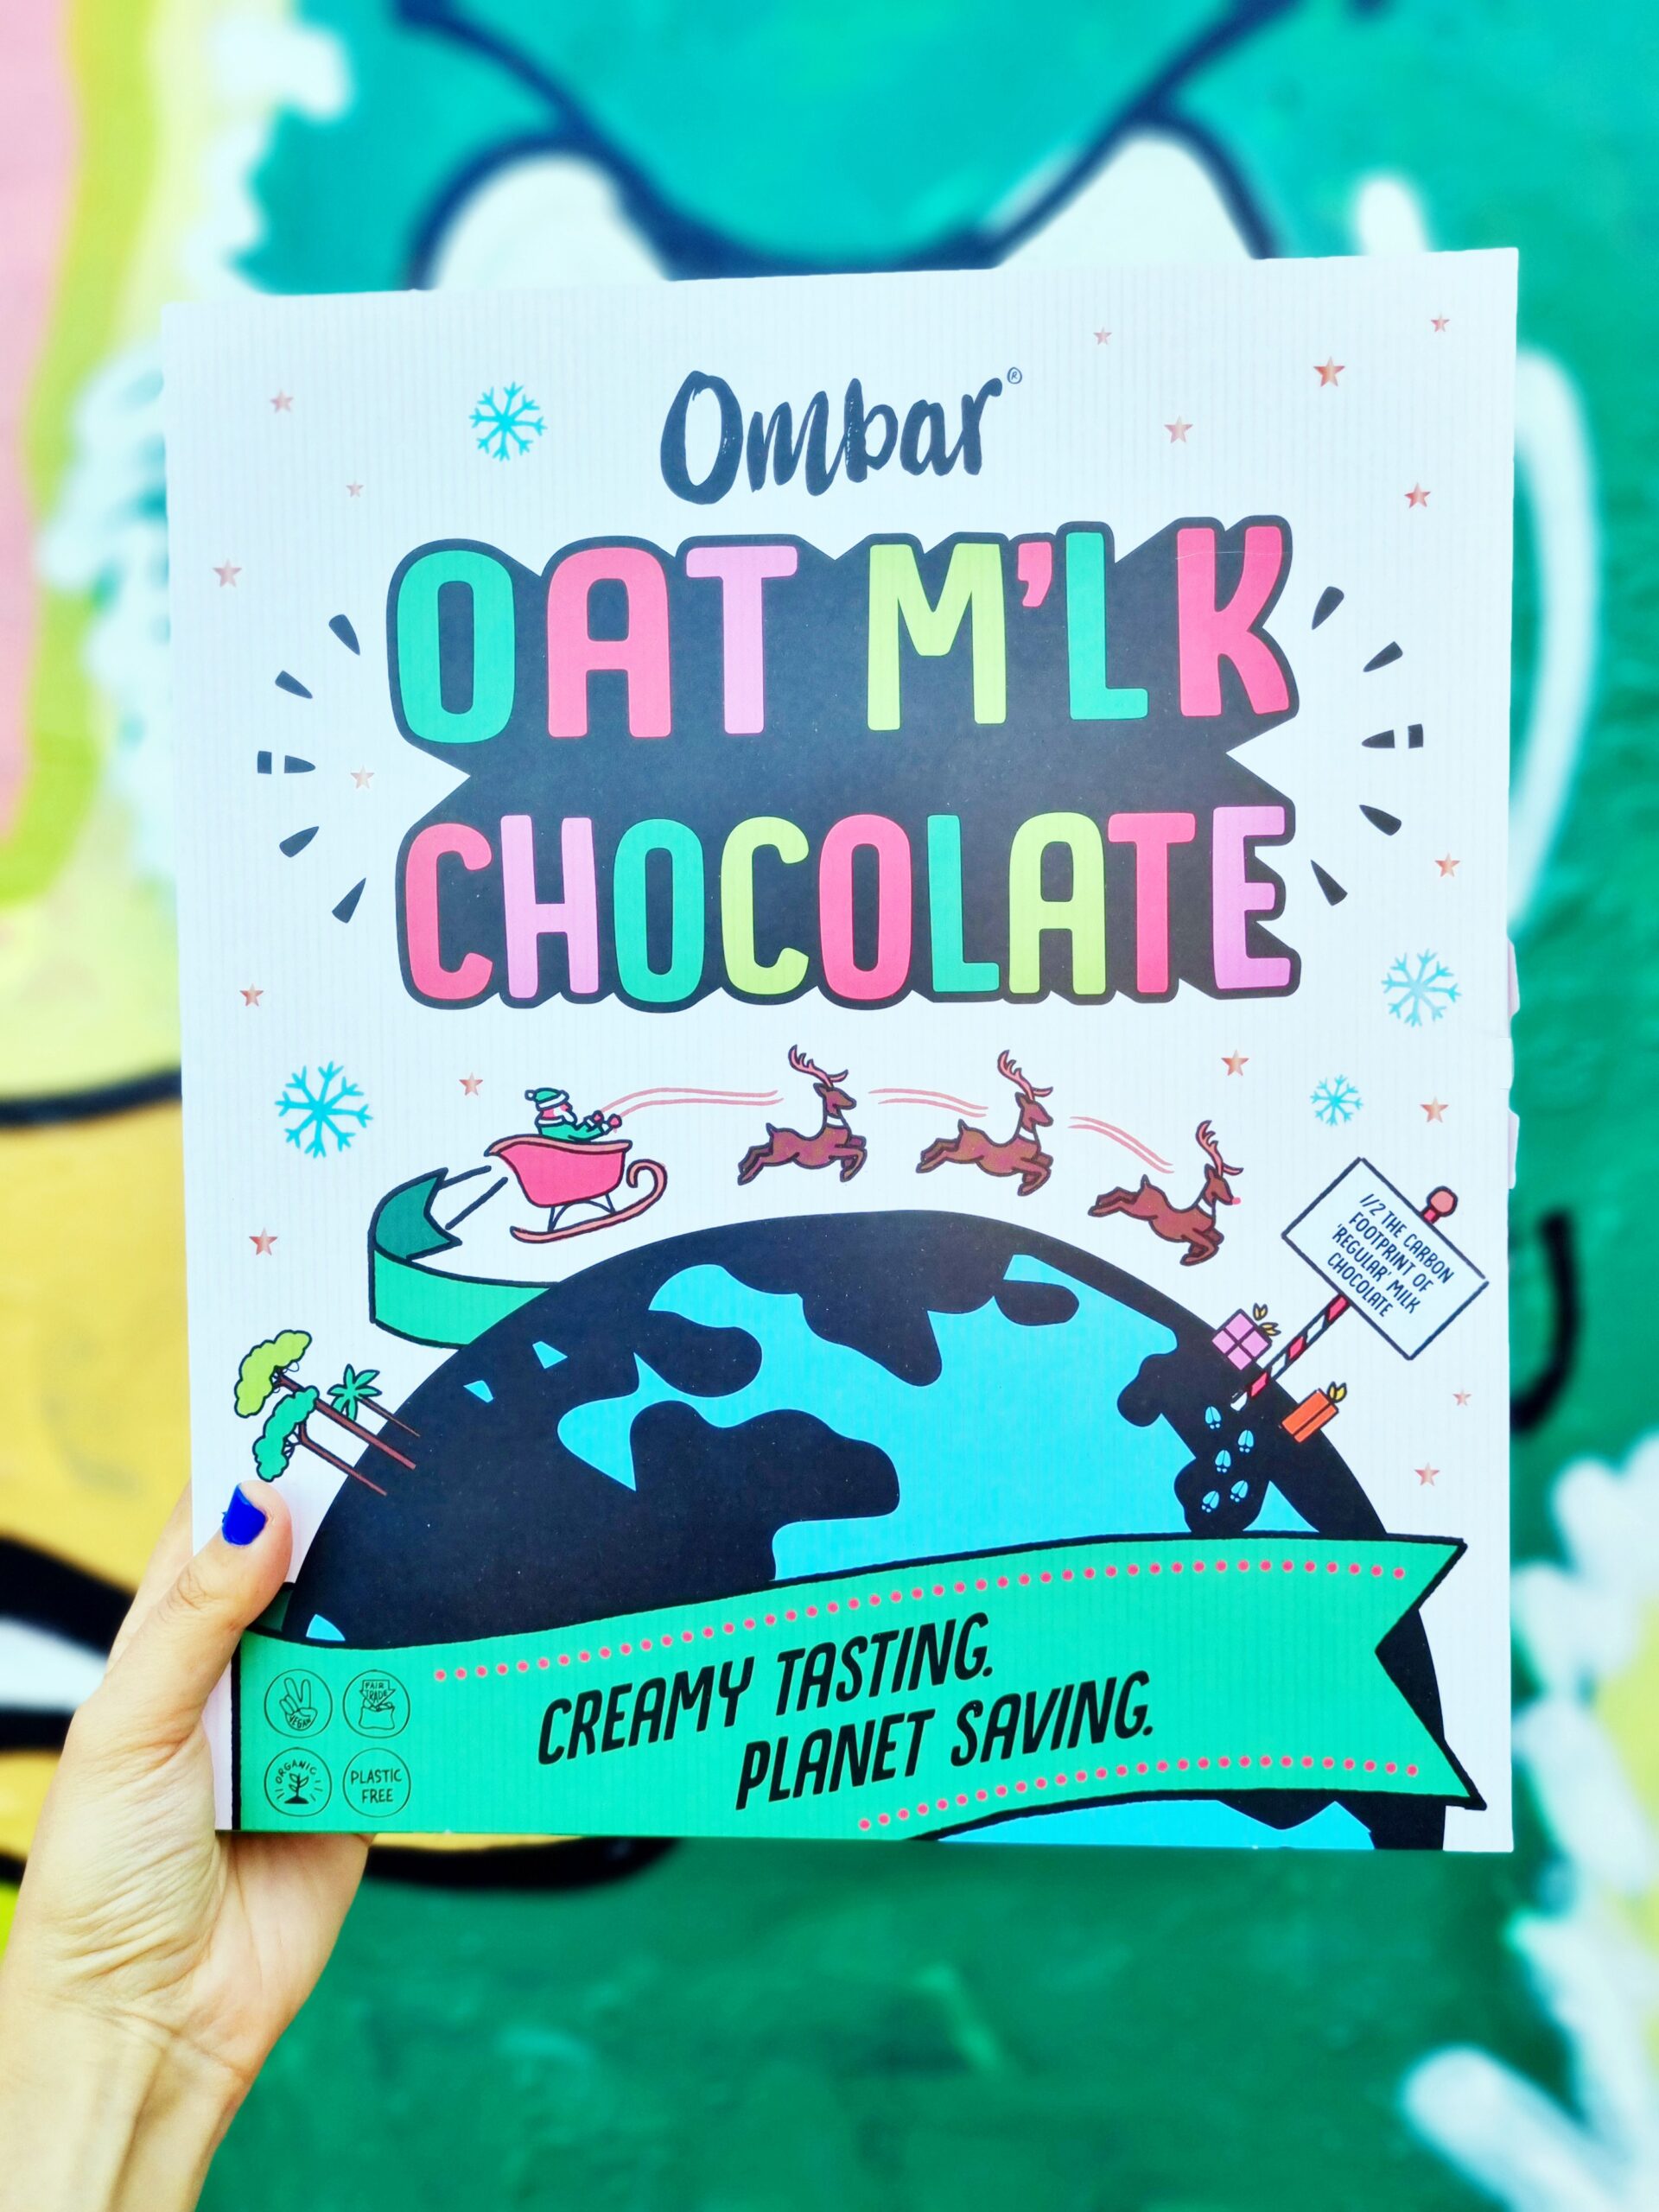 <img src="oat milk.jpg" alt="oat milk ombar calendar"/>